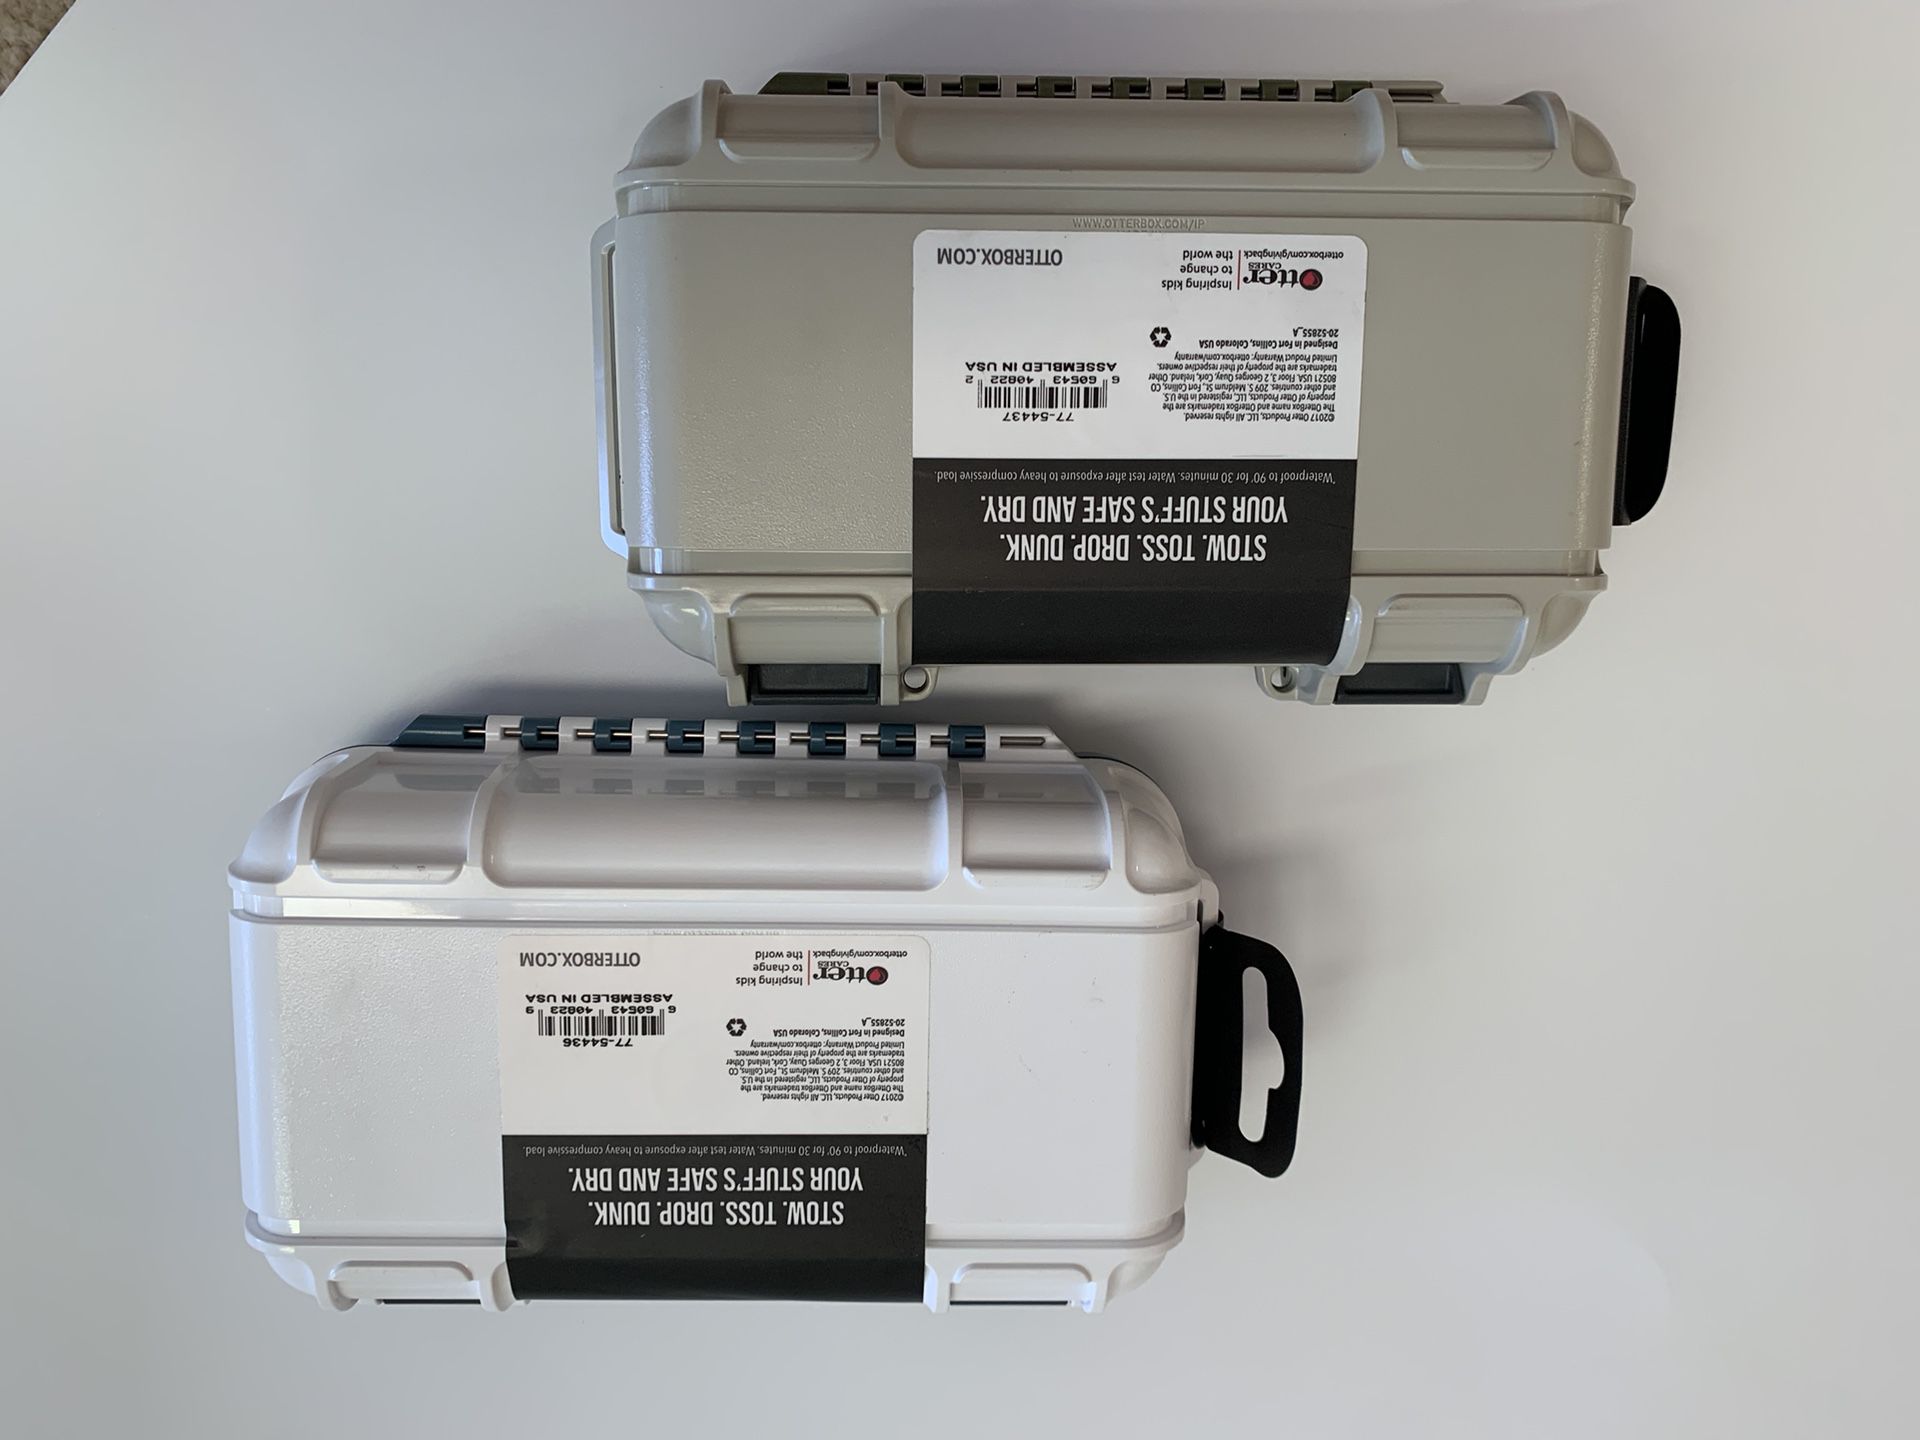 Otterbox 3250 Dry Box Power Kit – Diamondback Branding